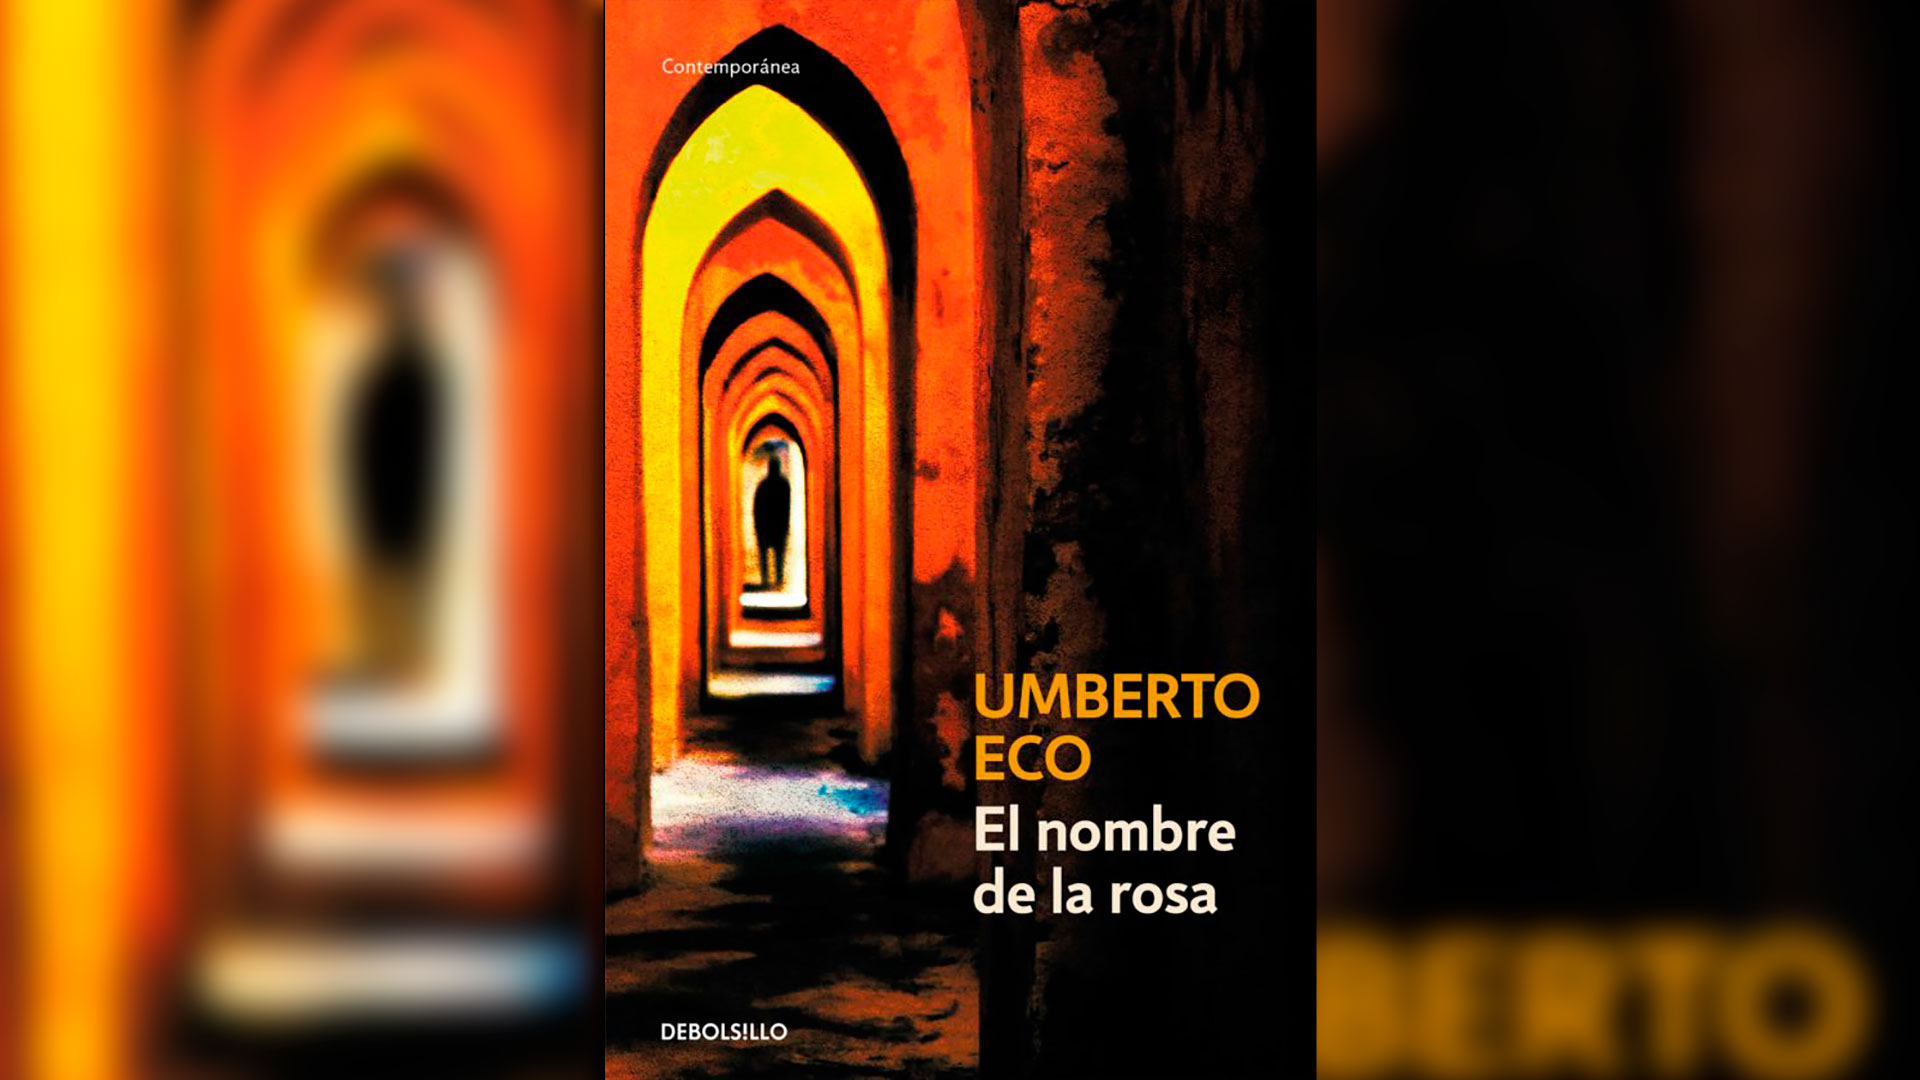 Portada del libro "El nombre de la rosa", de Umberto Eco. (Penguin Random House).